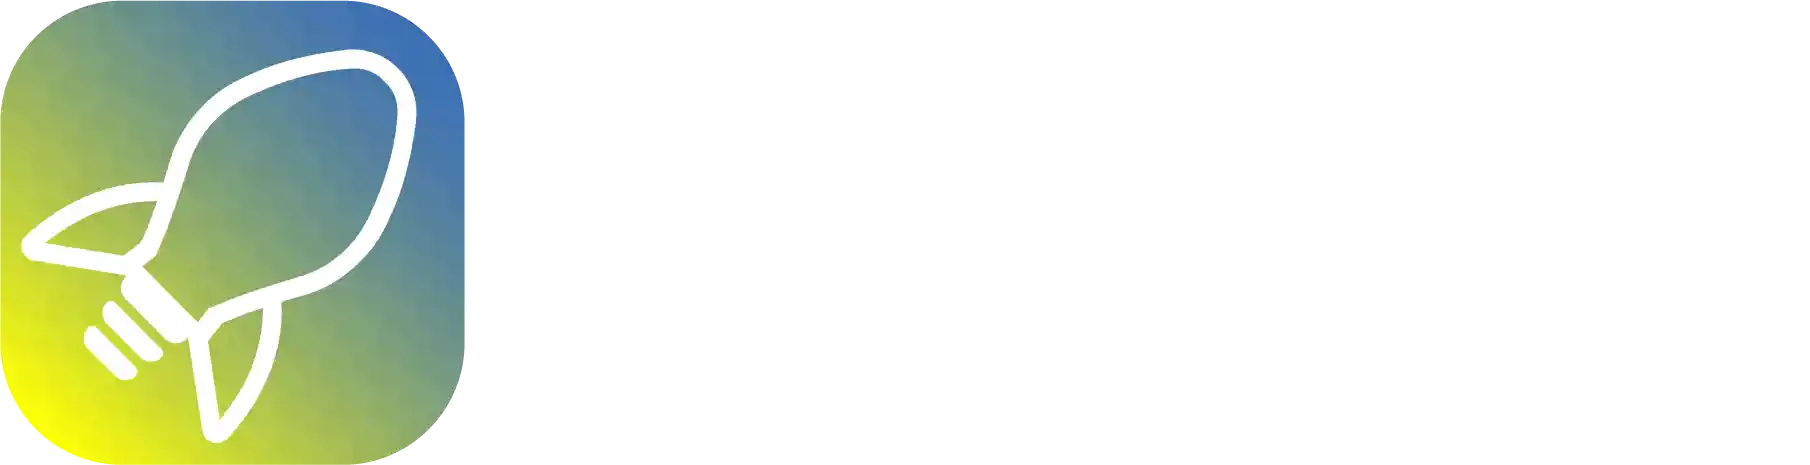 Student Consultant Logo met witte tekst